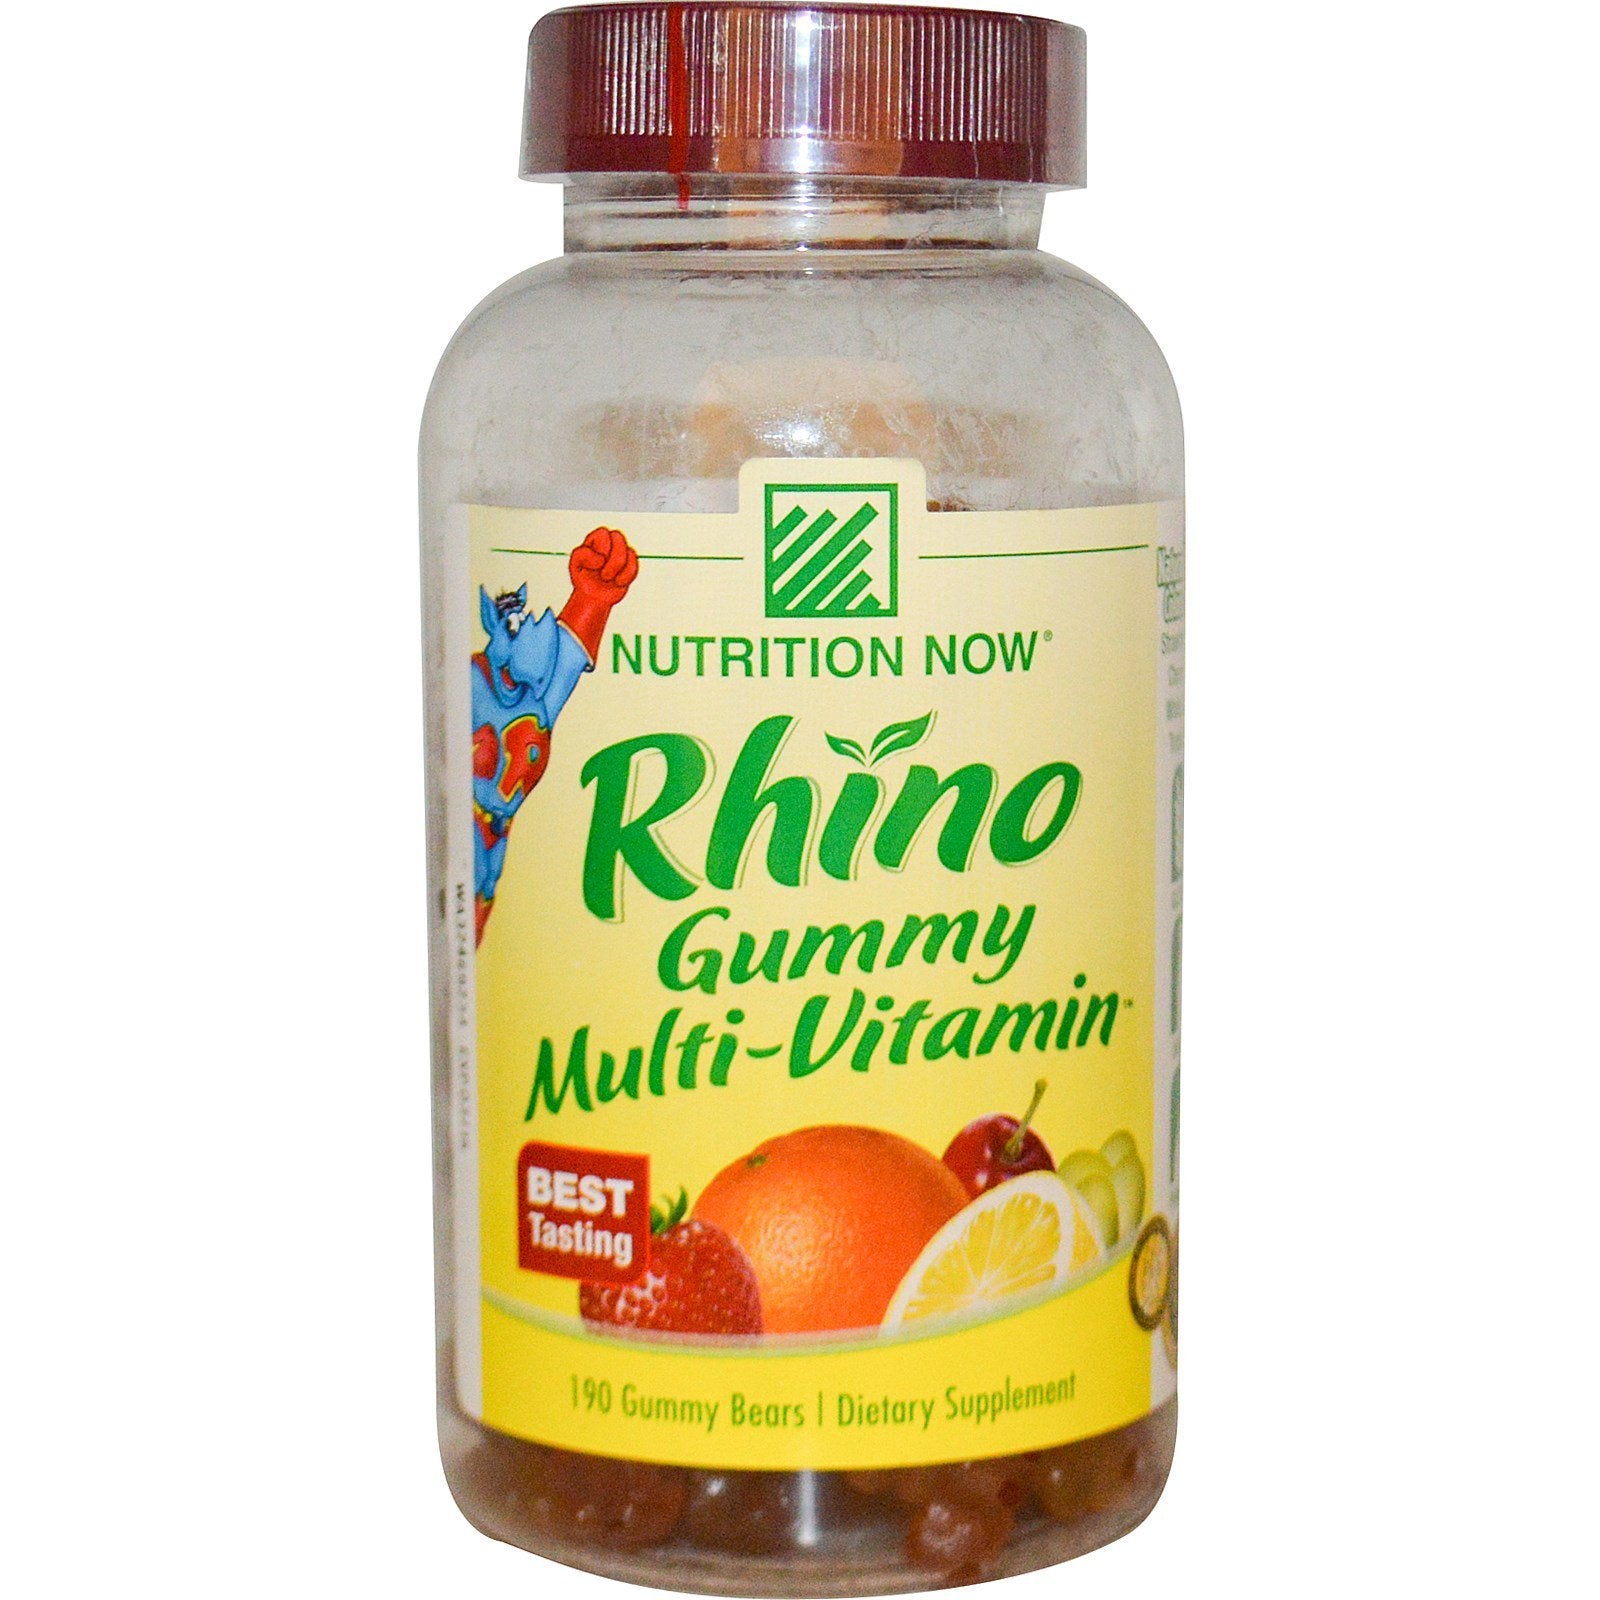 Nutrition Now, Rhino, Gummy Multi-Vitamin, 190 Gummy Bears